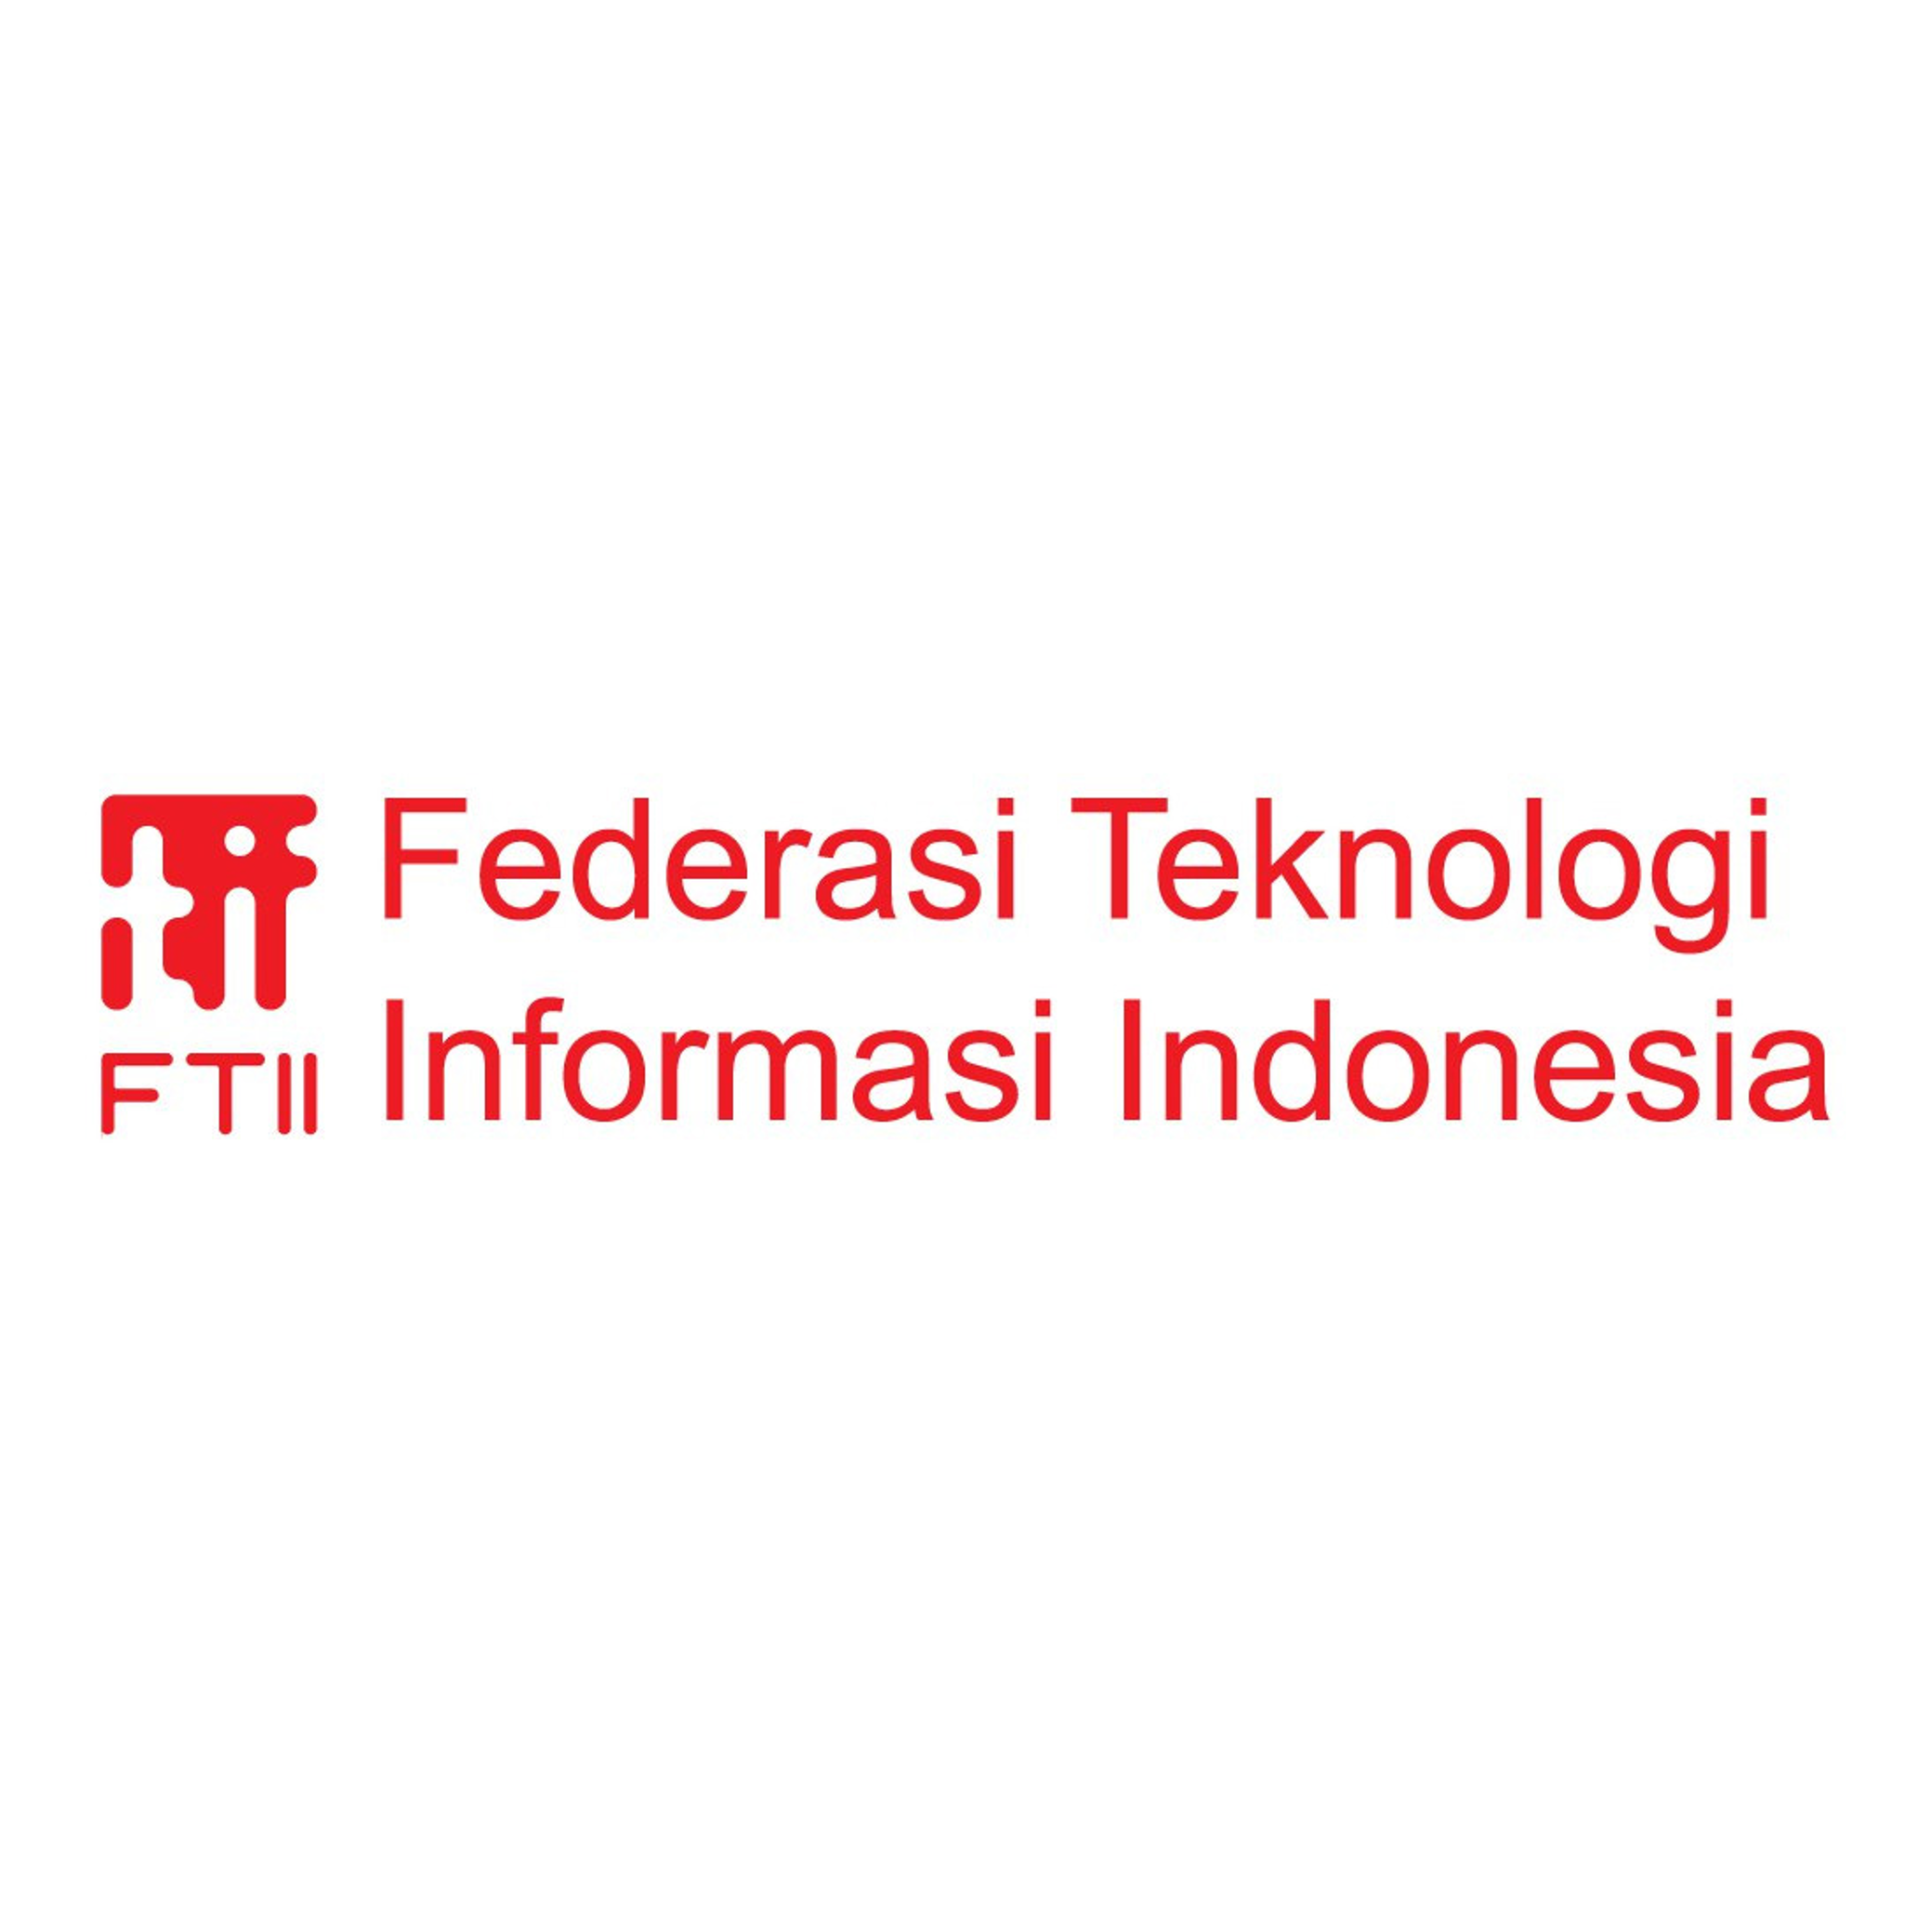 INDONESIA INFORMATION TECHNOLOGY FEDERATION (FTII)